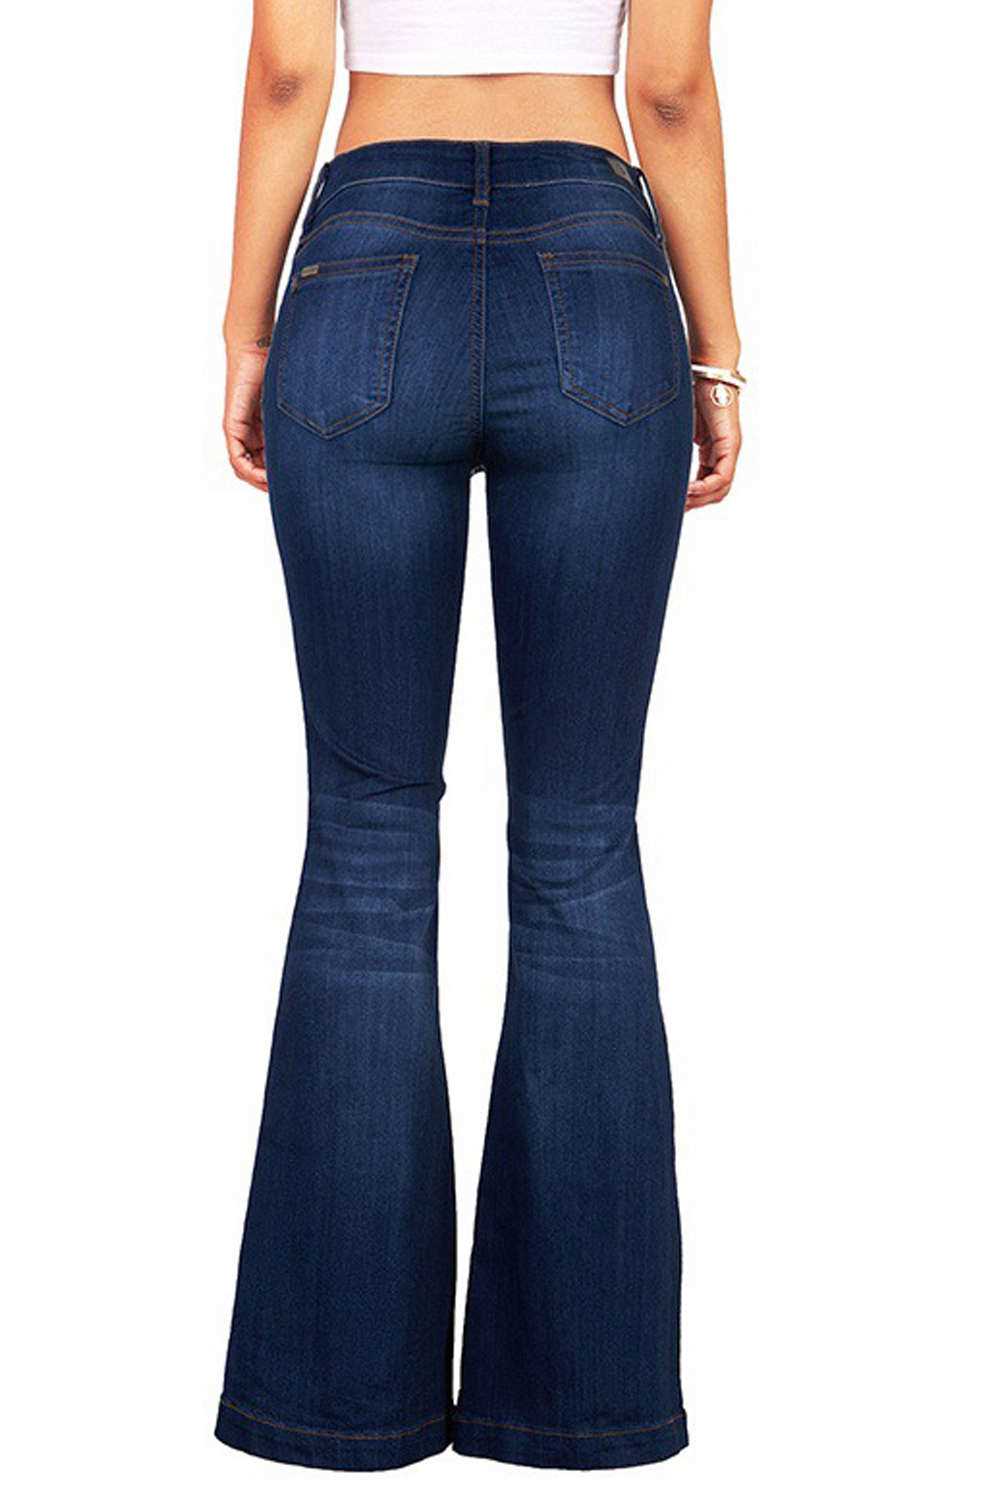 Iyasson Woman's Skinny Bell-bottom Pants Jeans